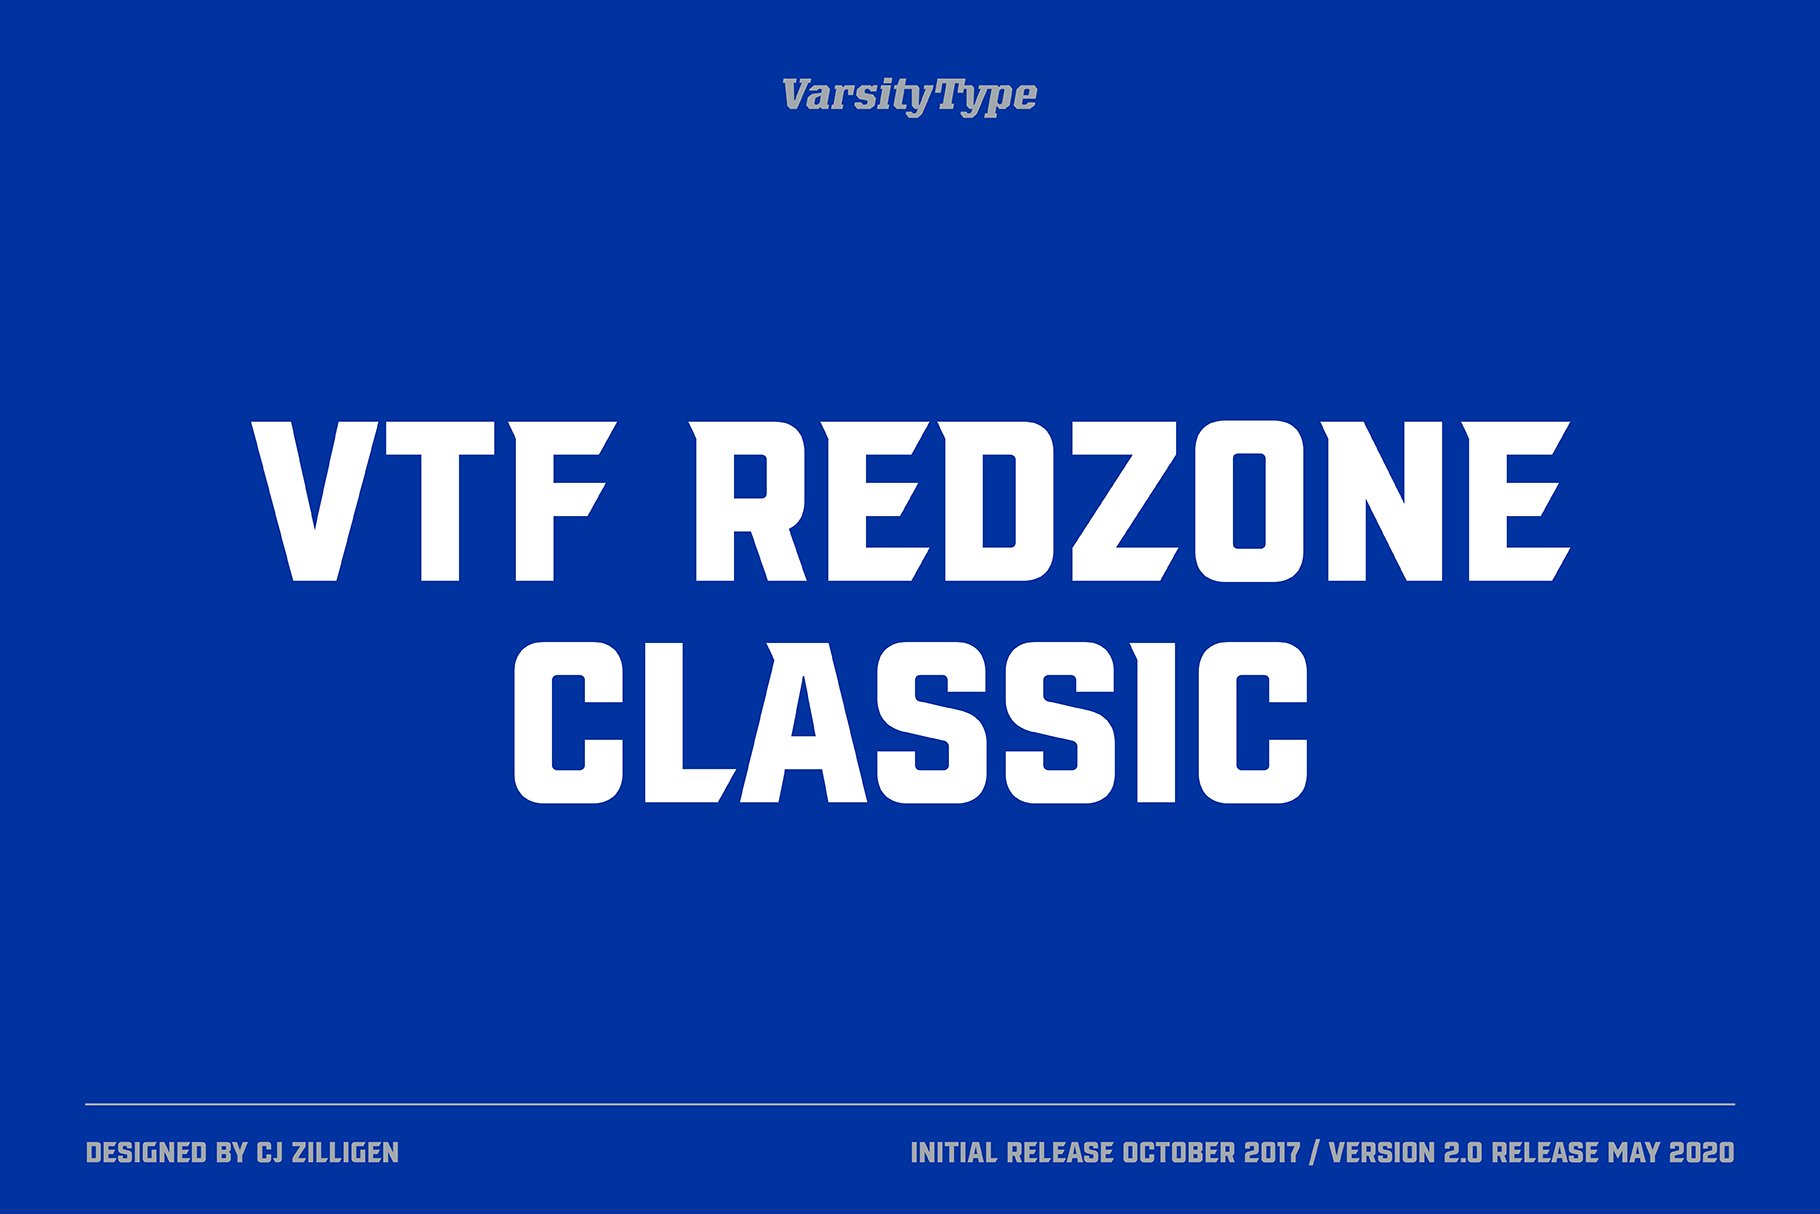 VTF Redzone Classic cover image.